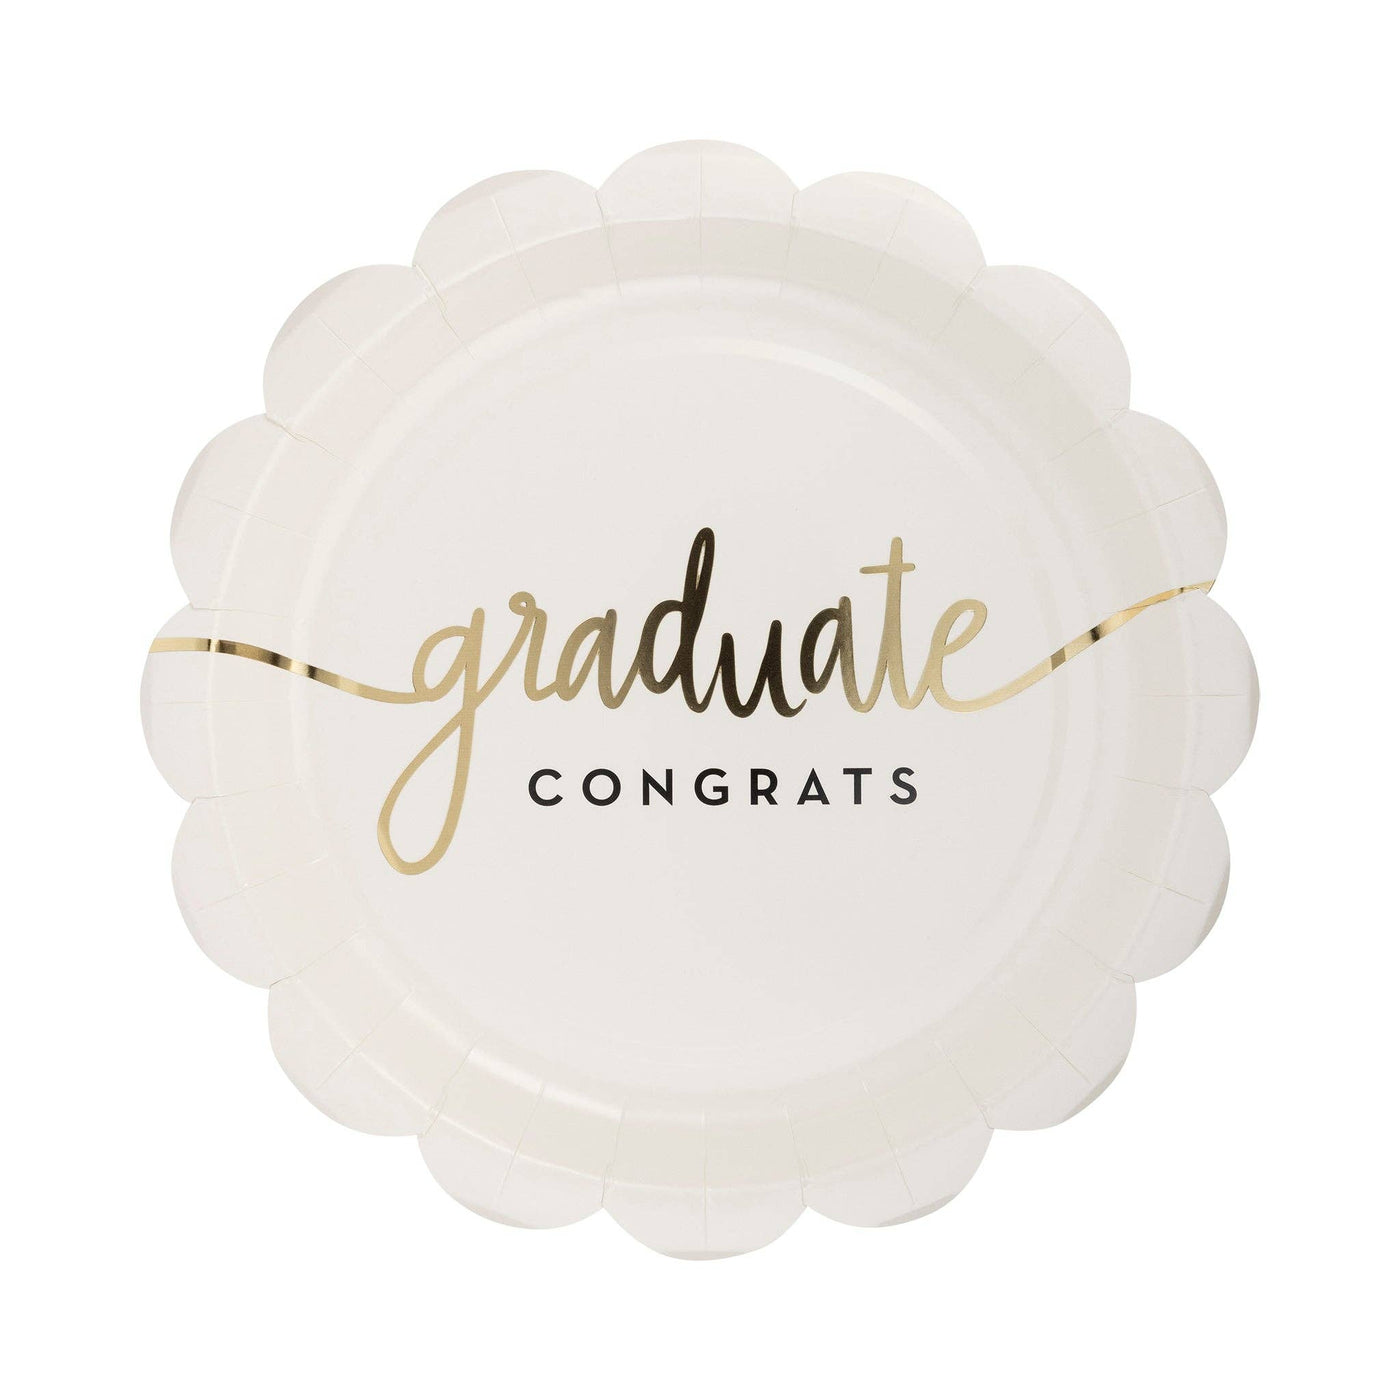 Graduate Congrats Paper Plate Set